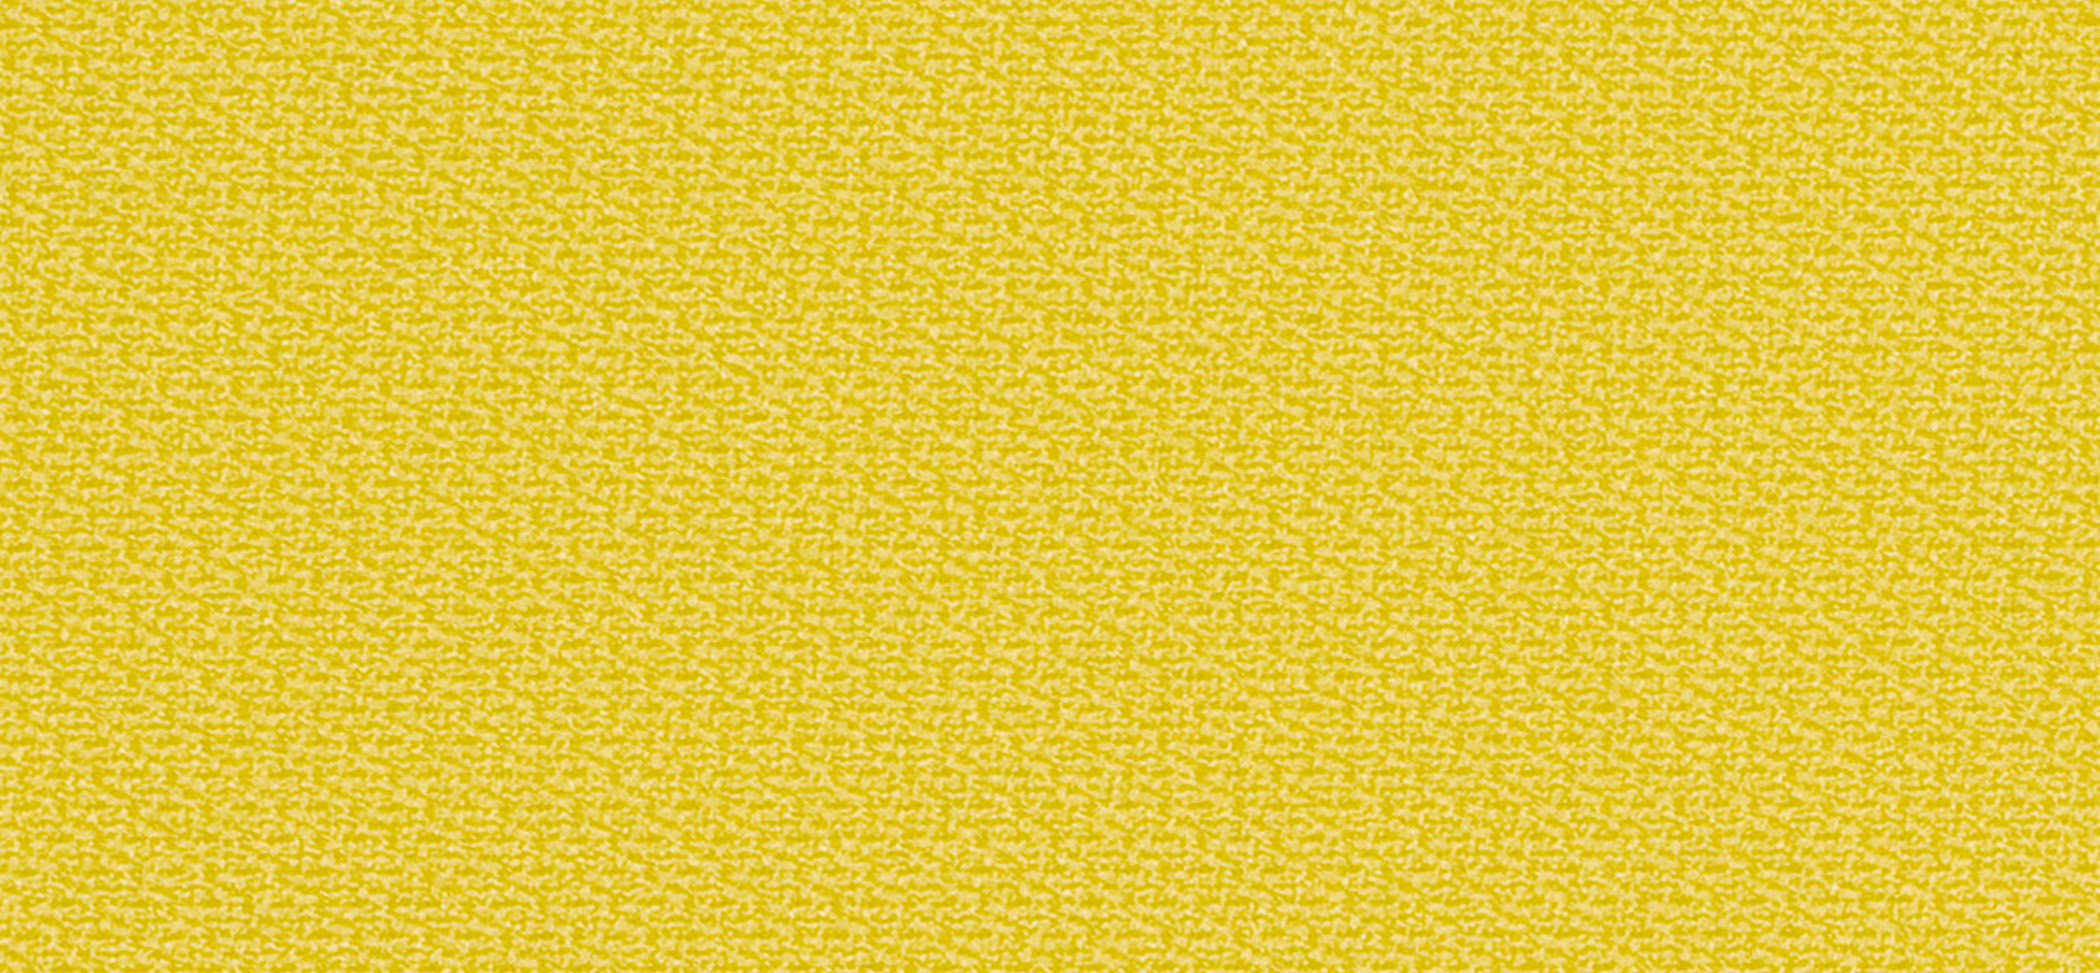 Twister yellow